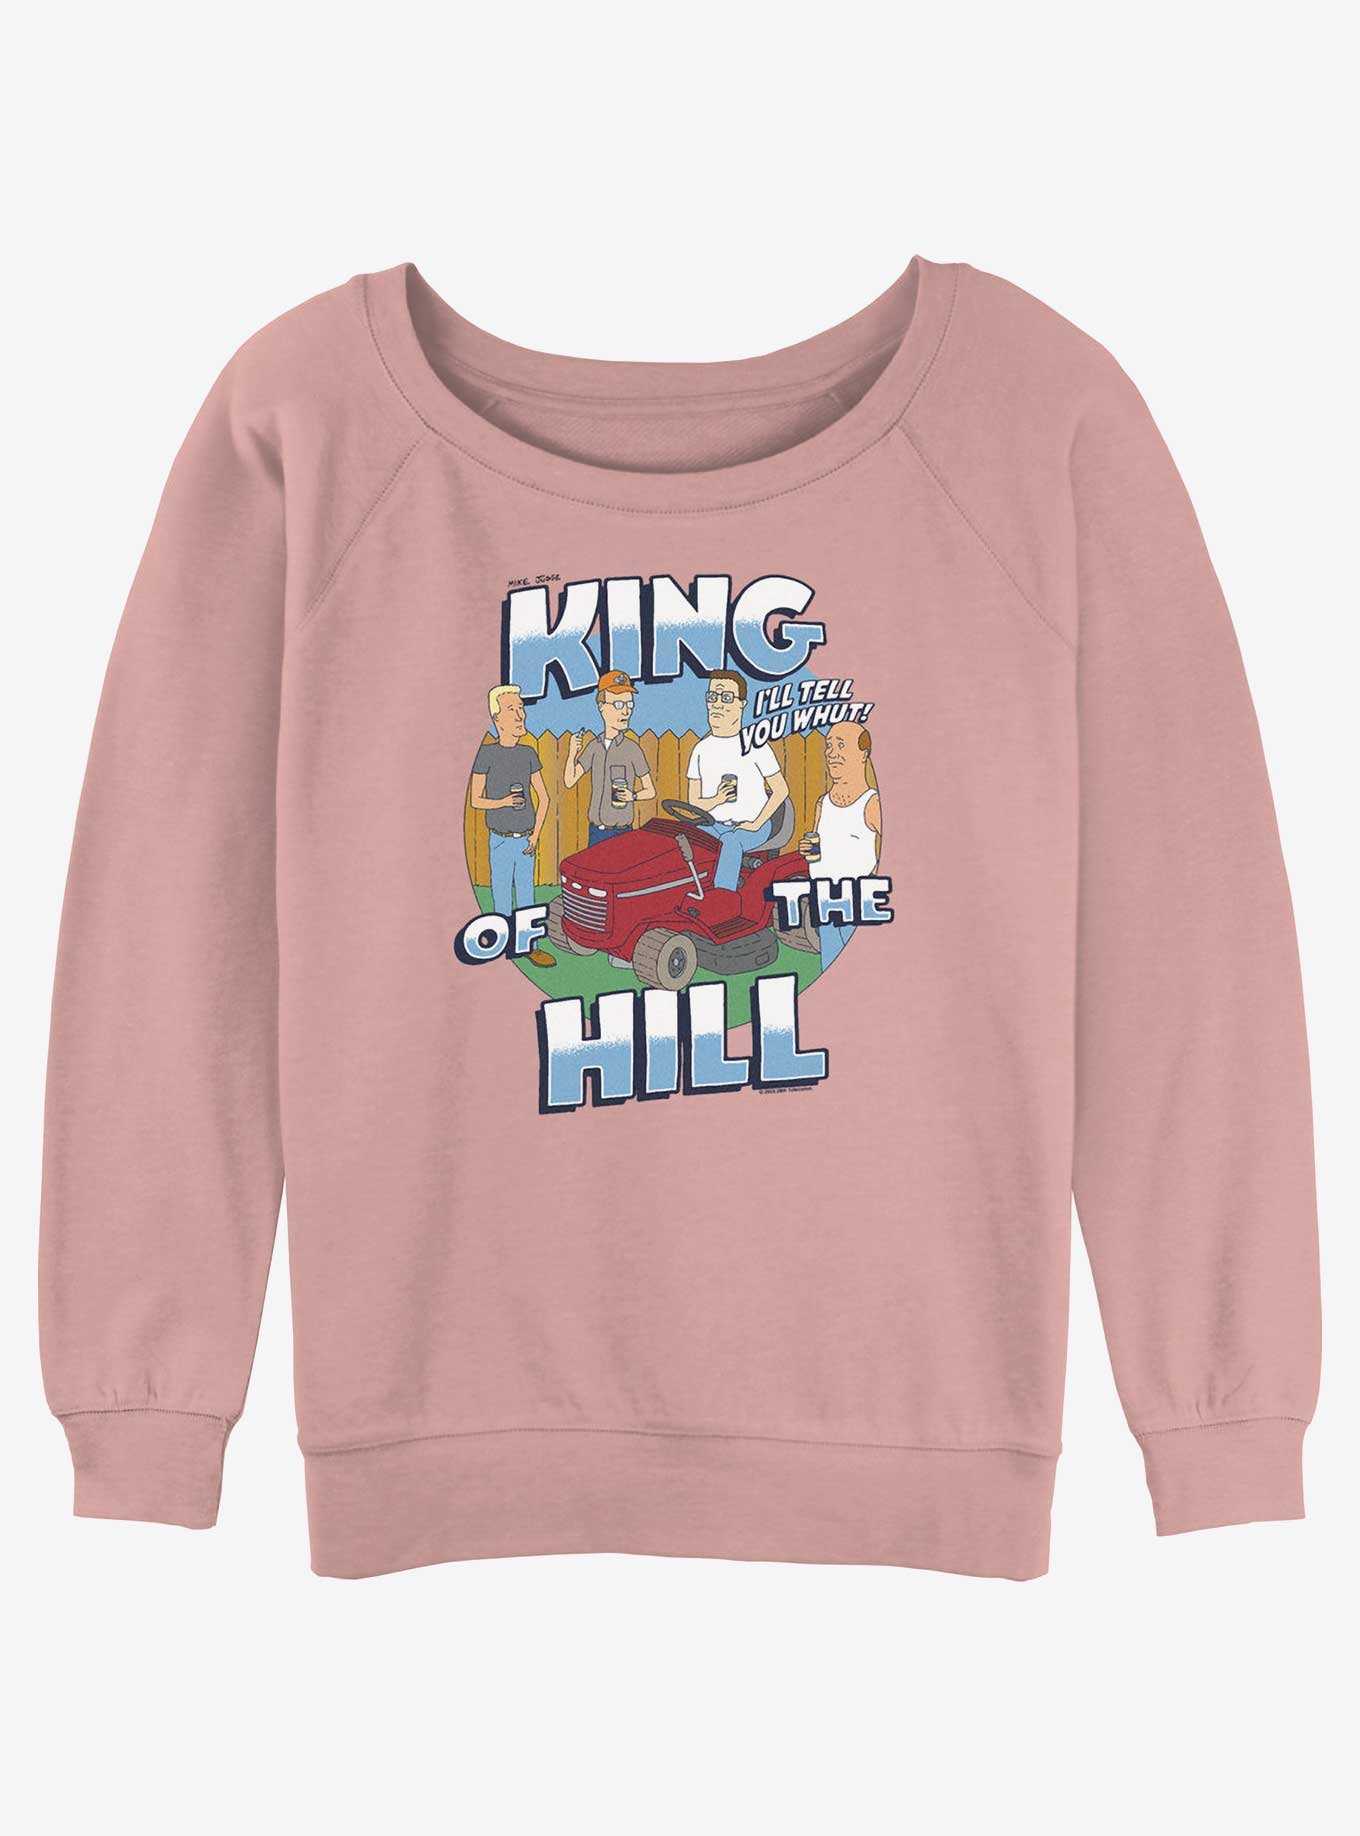 King Of The Hill Whut! Slouchy Girls Sweatshirt, , hi-res